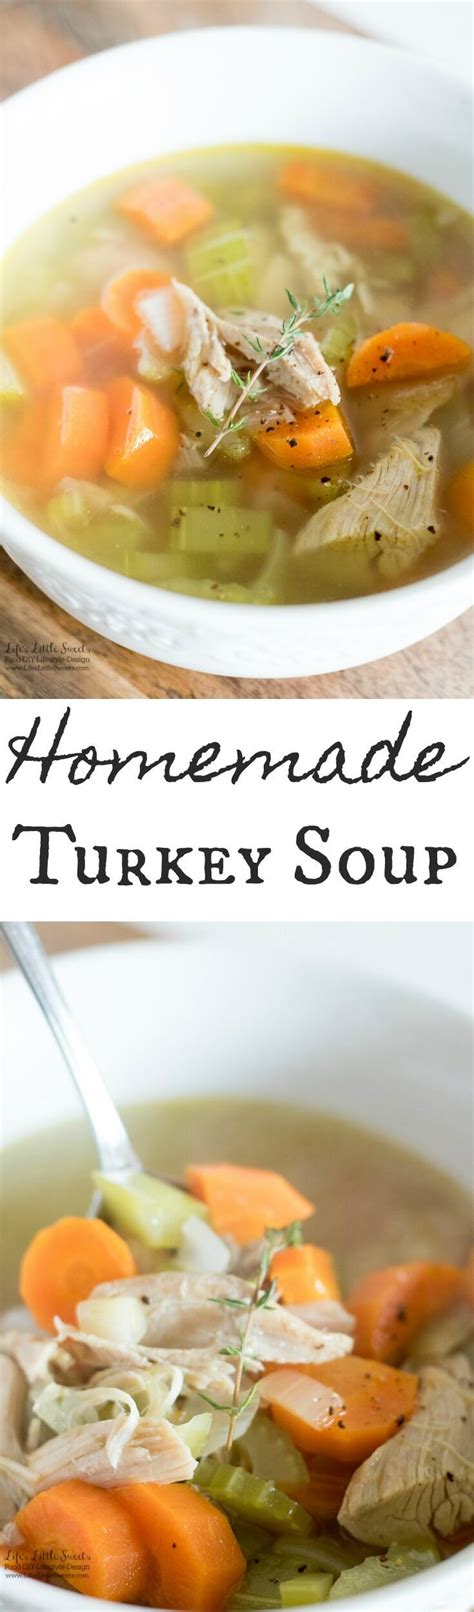 homemade turkey soup bone broth leftovers life s little sweets recipe turkey soup